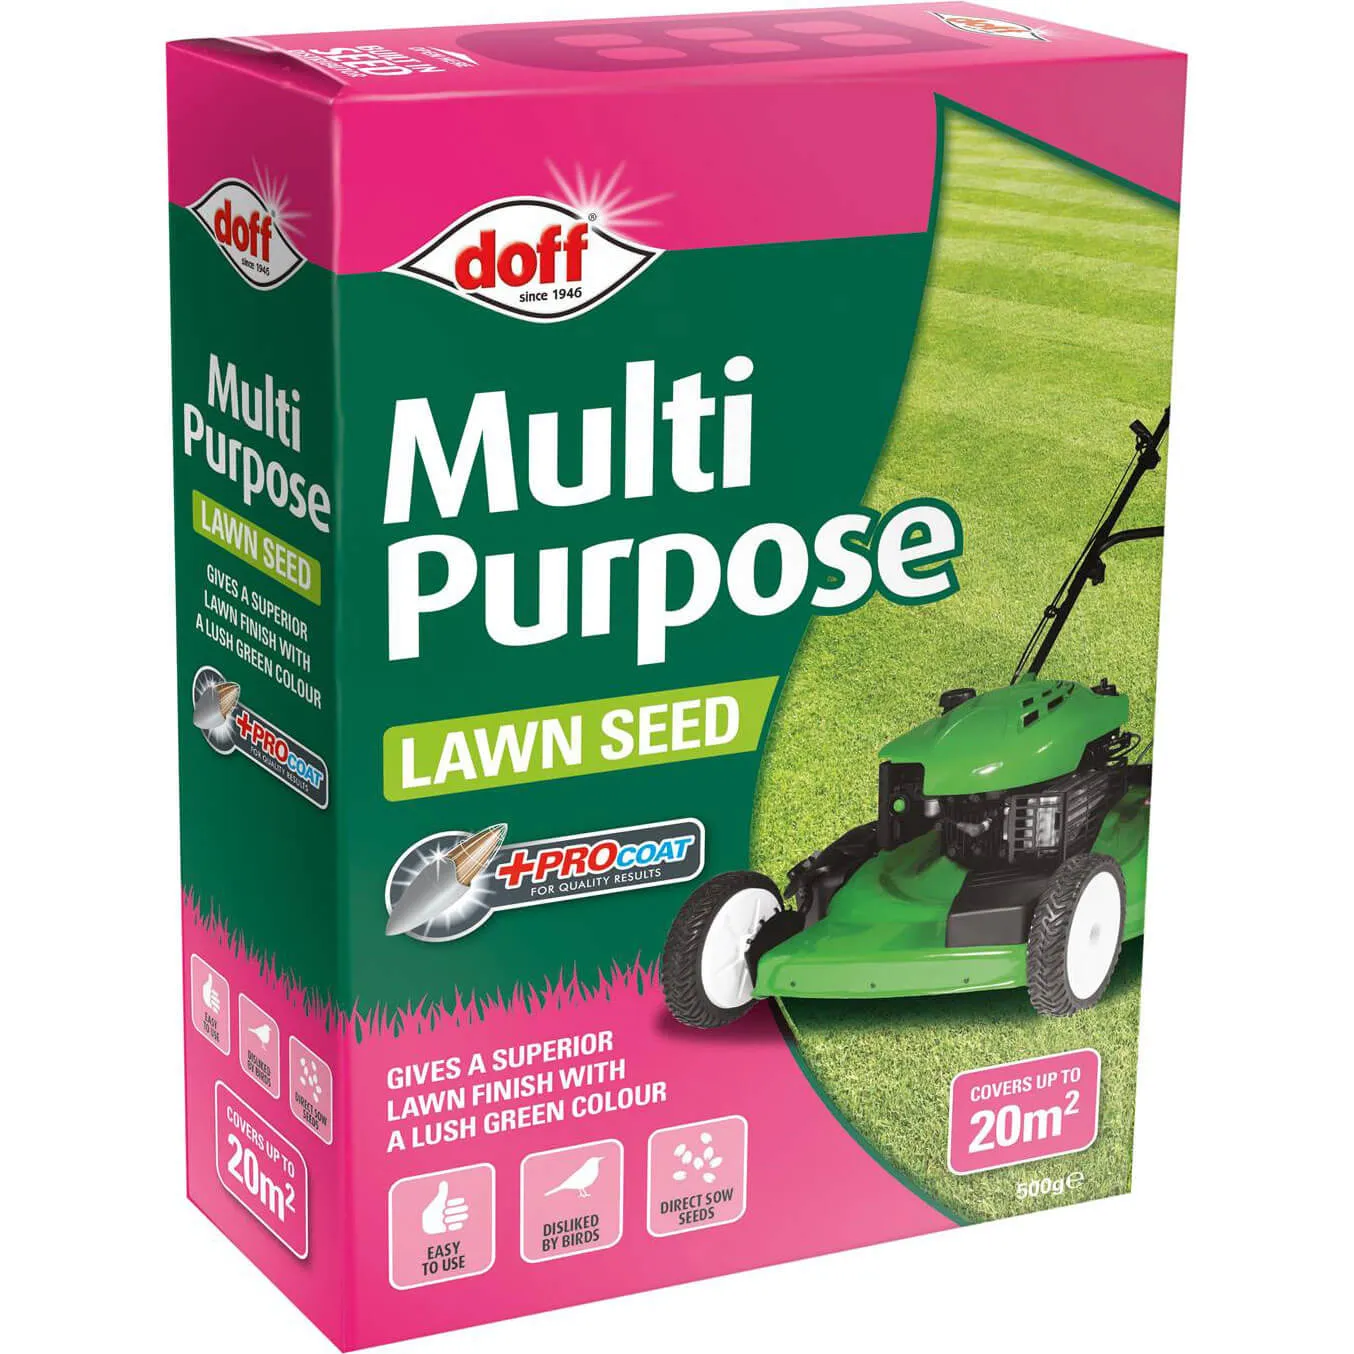 Doff Multi Purpose Lawn Seed - 500g